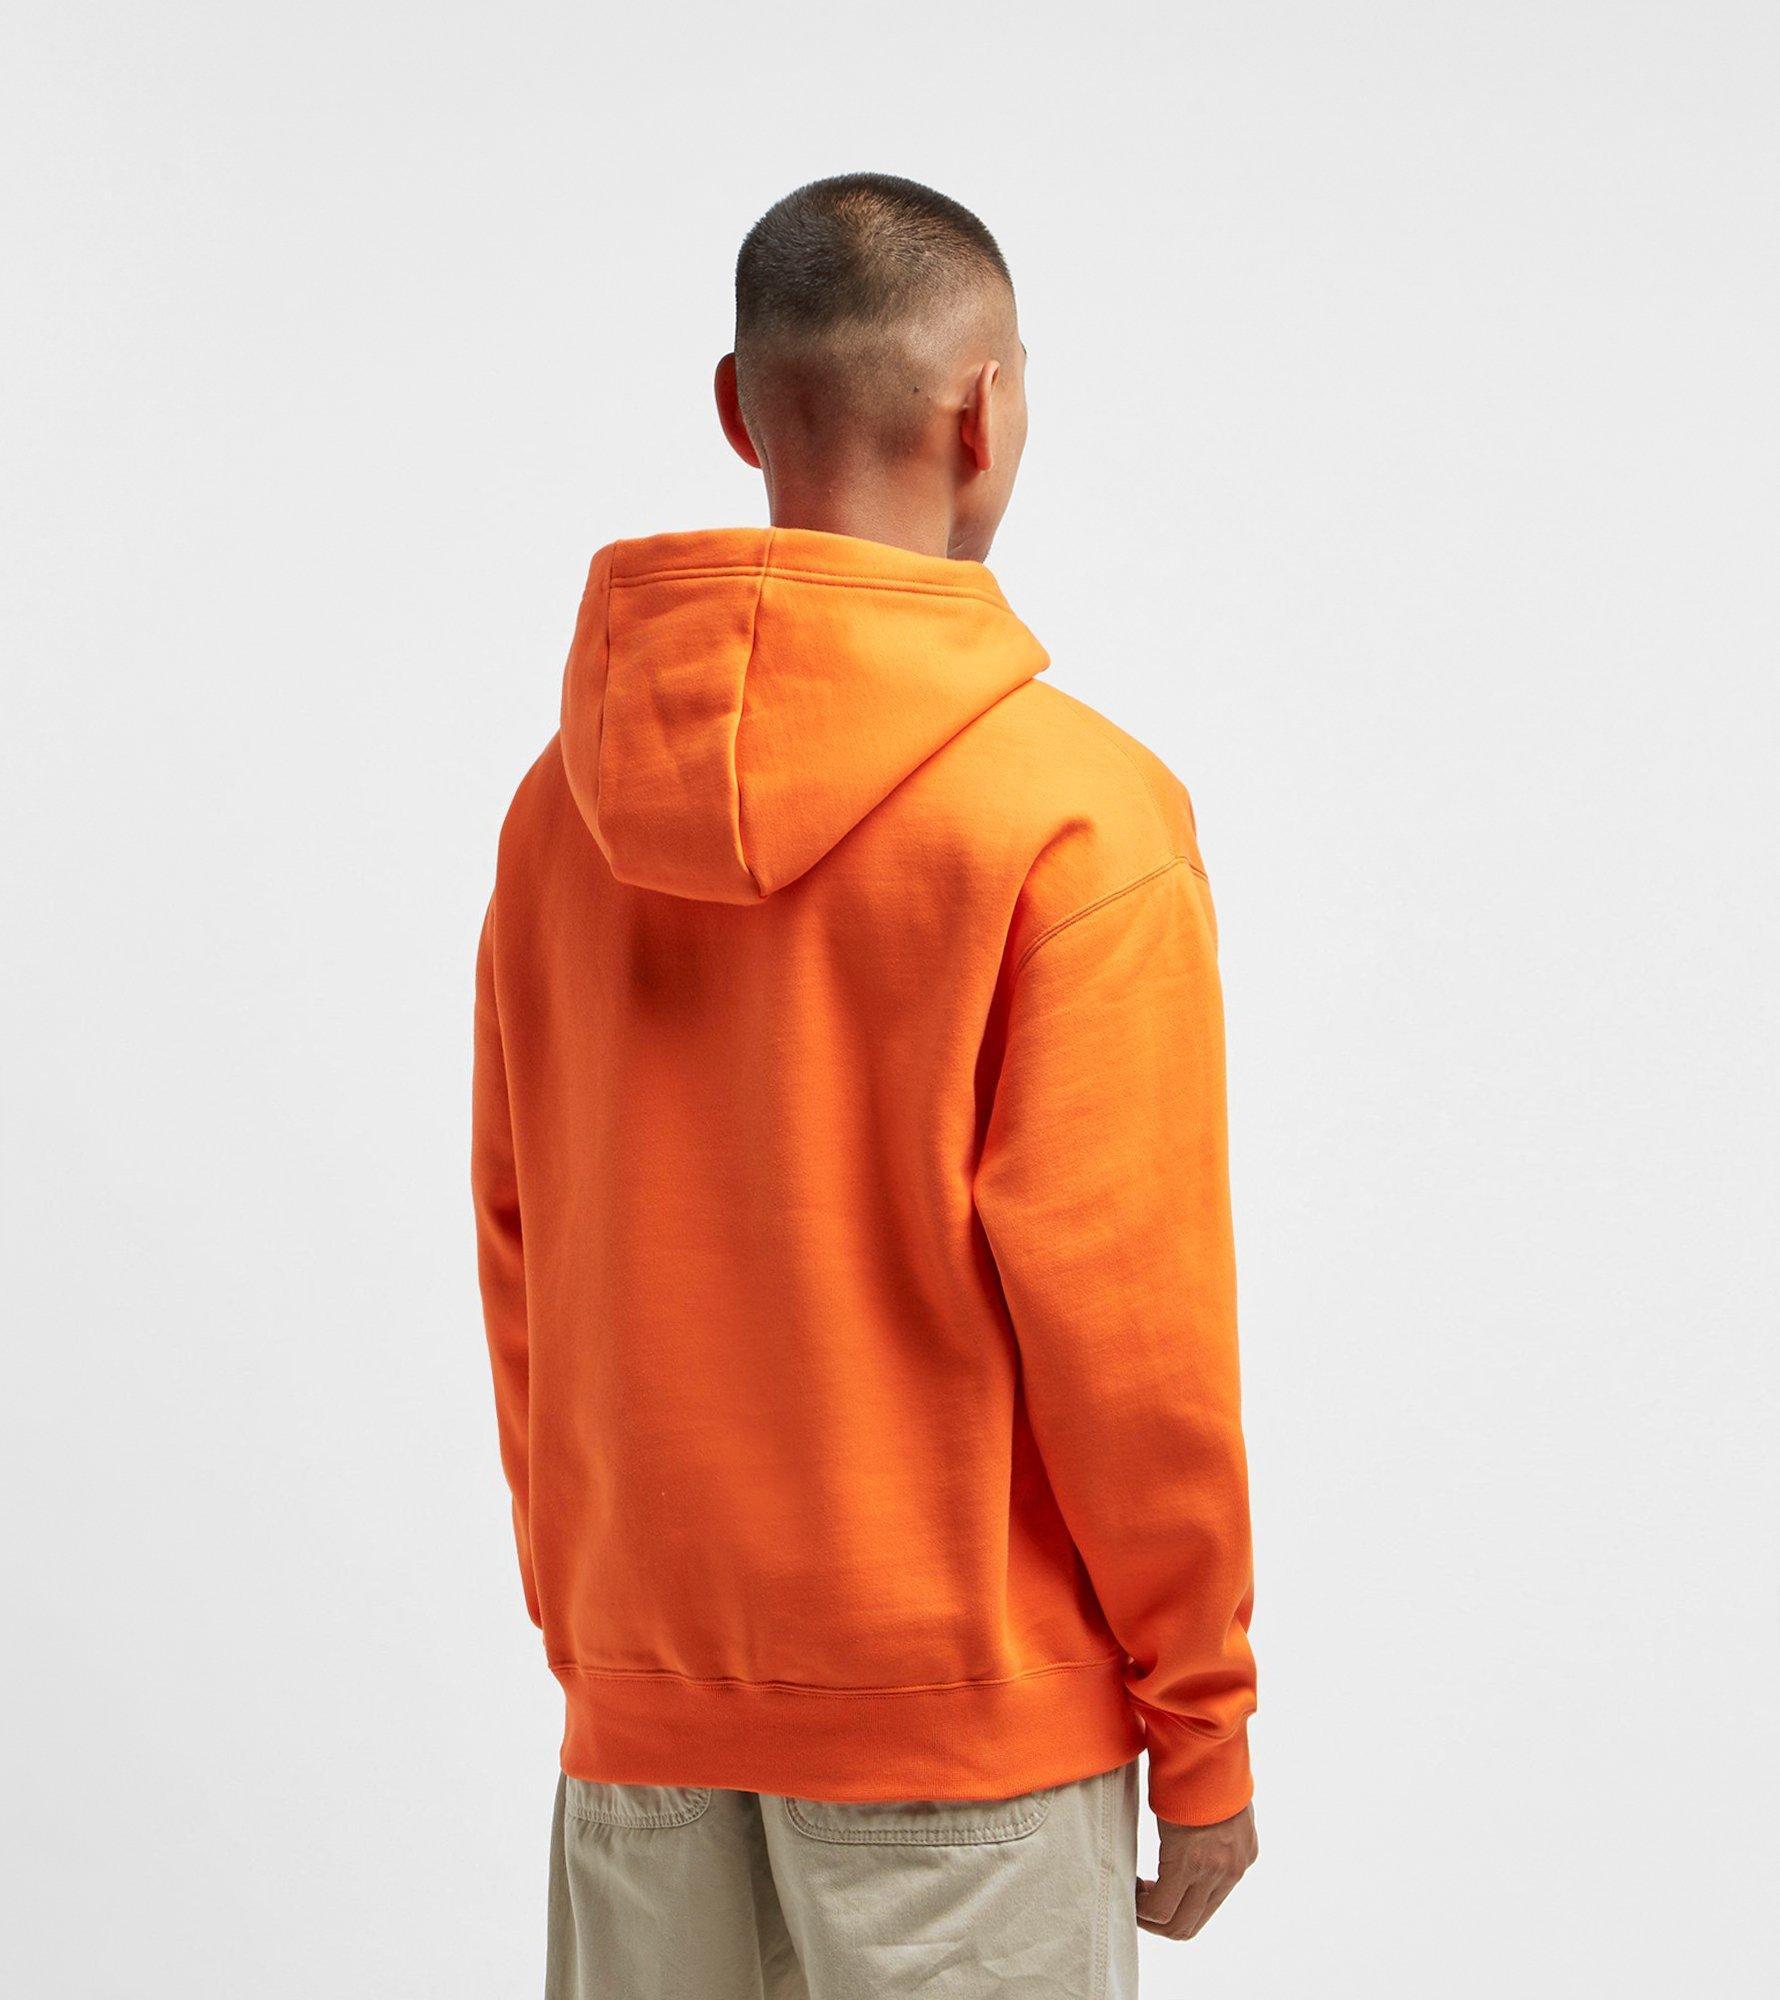 Nike Fleece Acg Hoodie in Orange for Men - Lyst